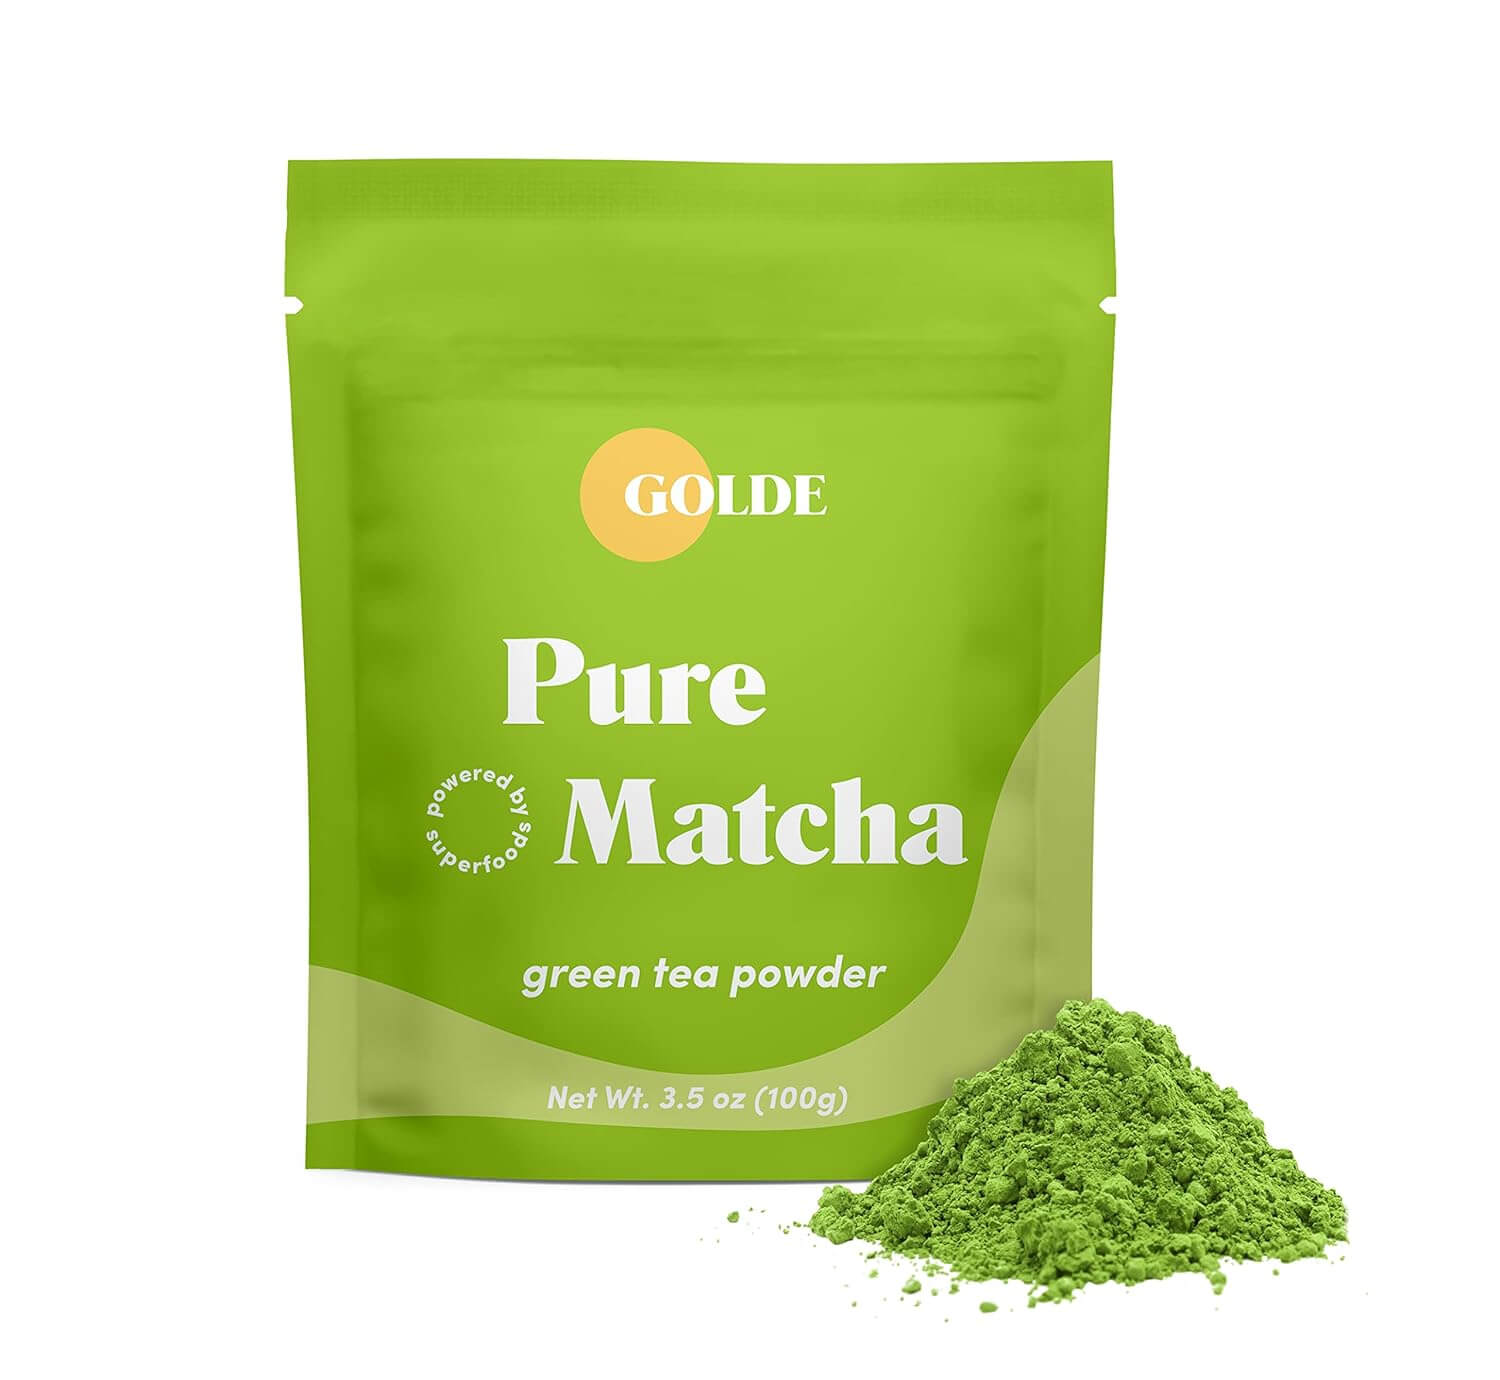 Golde Pure Matcha Powder